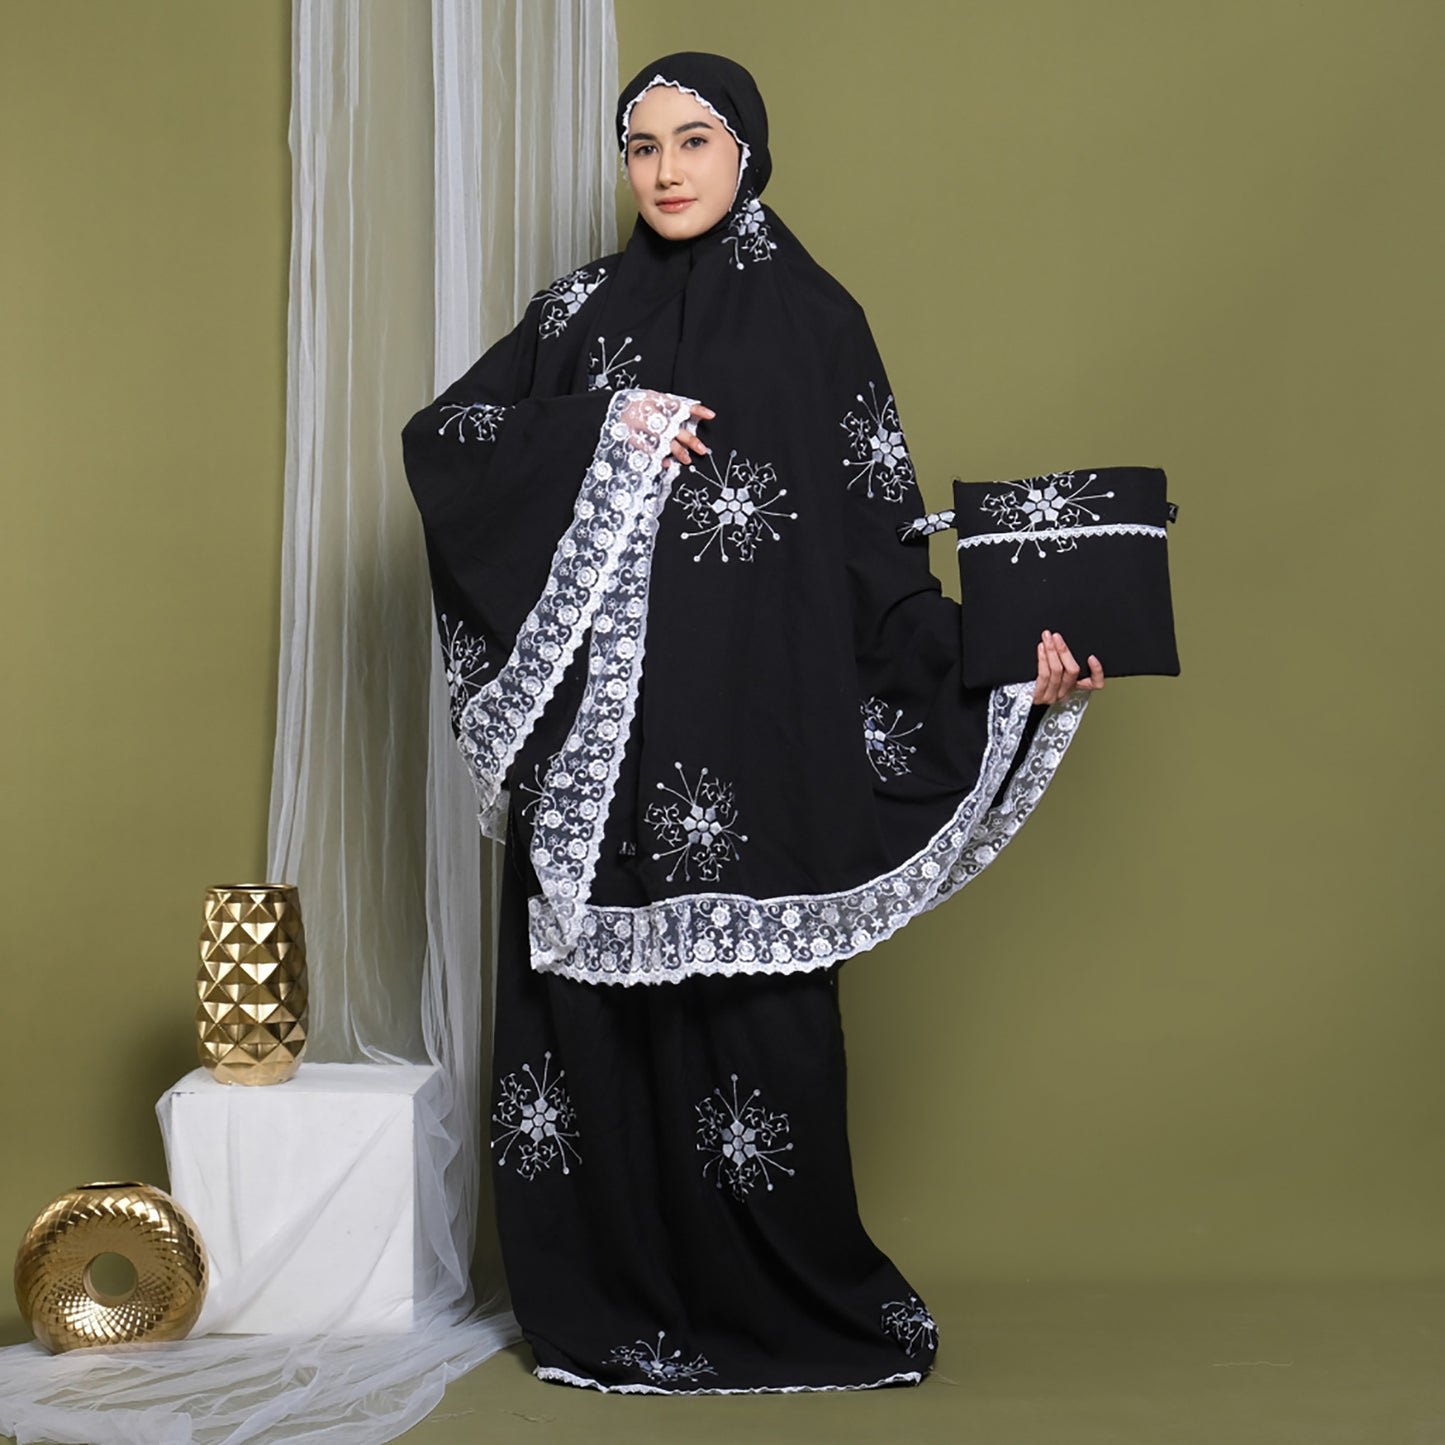 Elegance Exquisite Embroidered Cotton Zain Starla Series Prayer Sets for Women, Prayer Dress, Mukena, Prayer Set, Prayer clothes